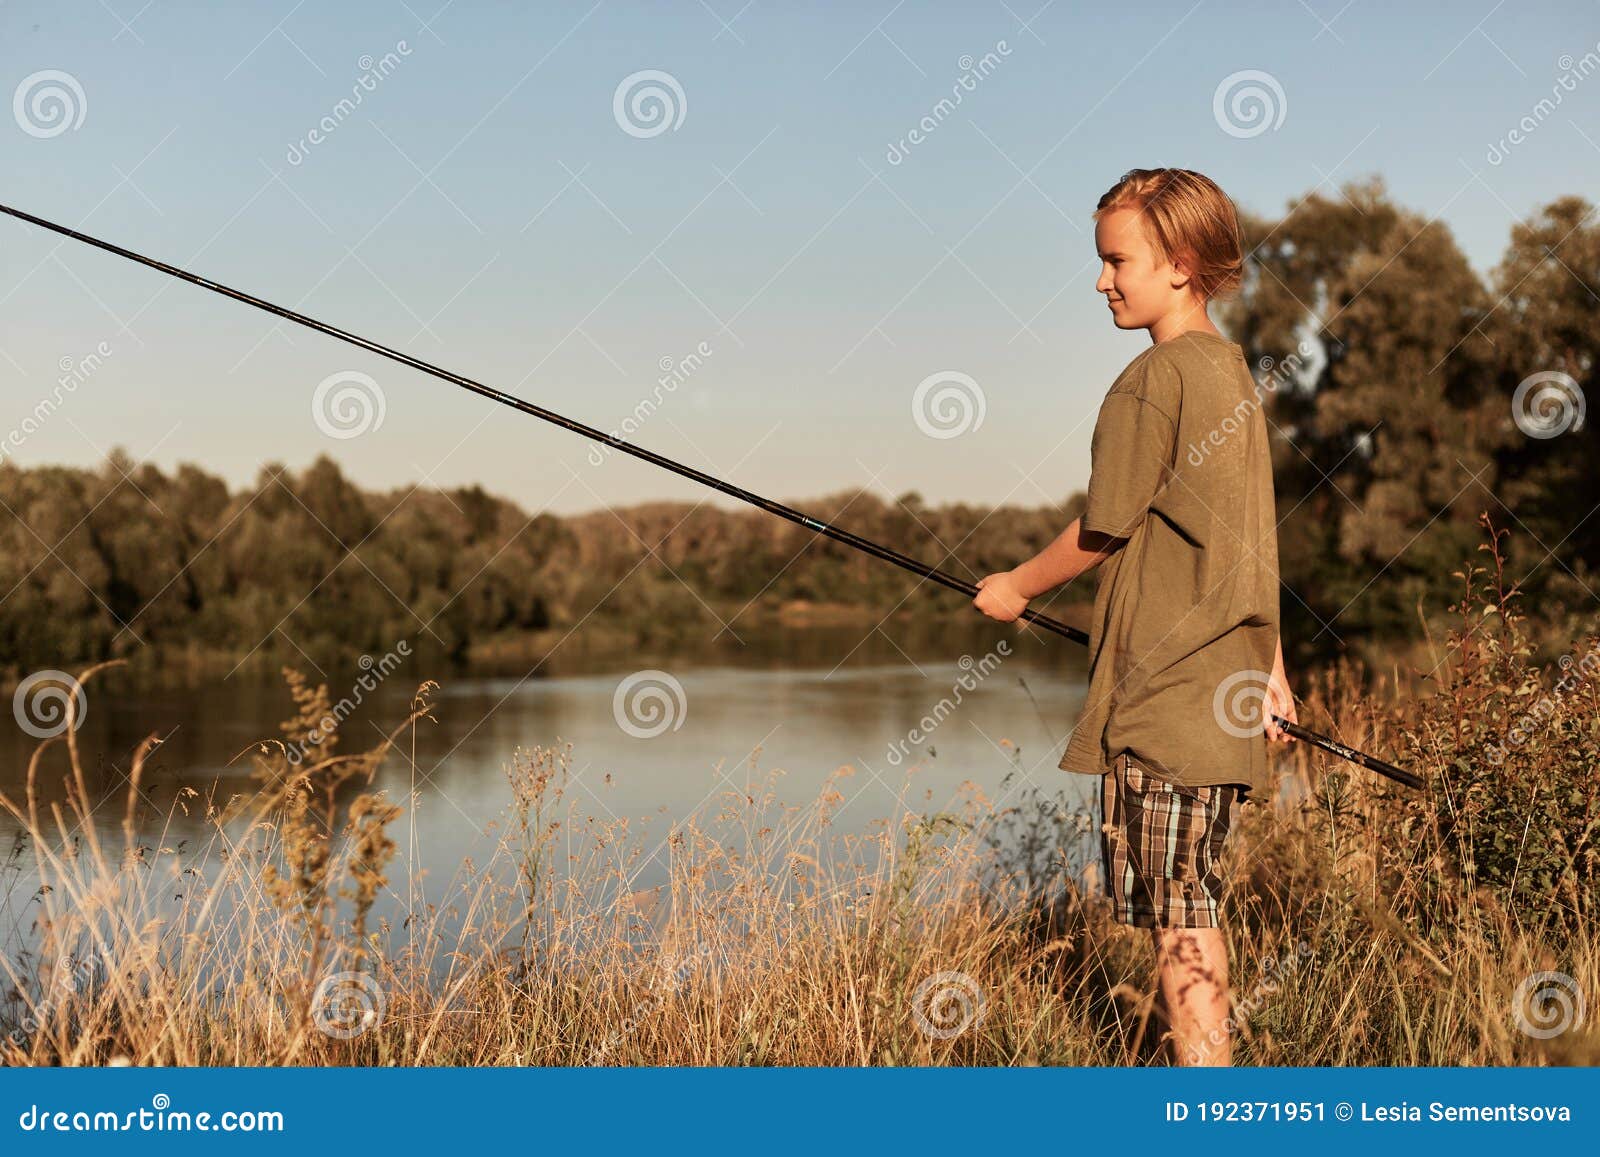 Little Boy Holding Fishing Pole in Hands, Wearing Green T Shirt